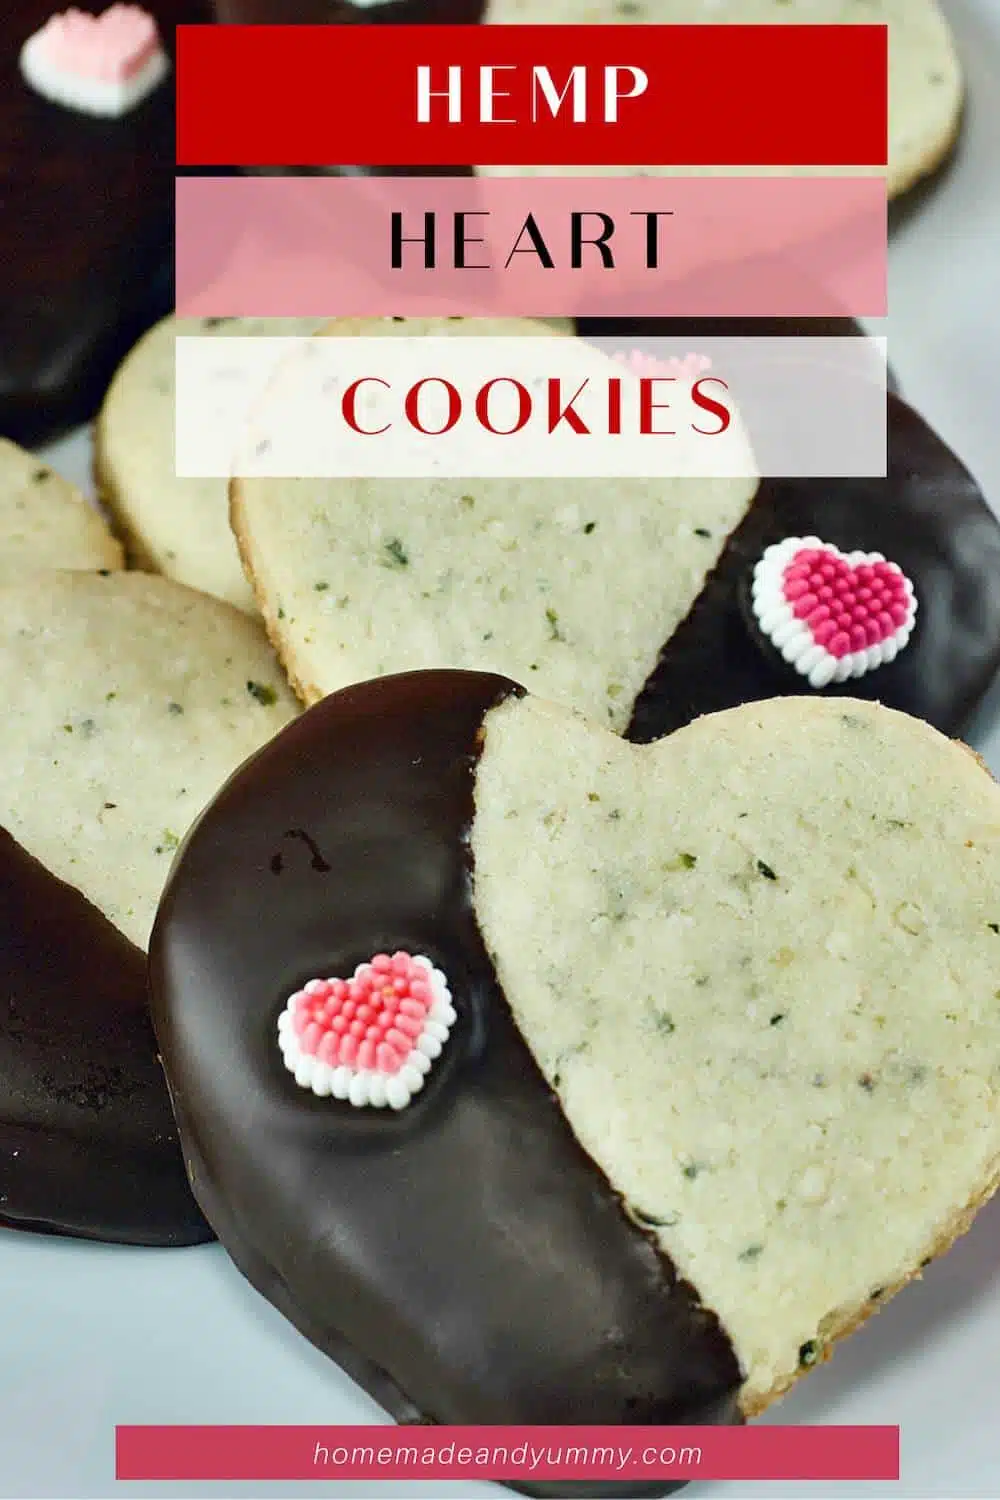 Hemp Heart Cookie Pin Image